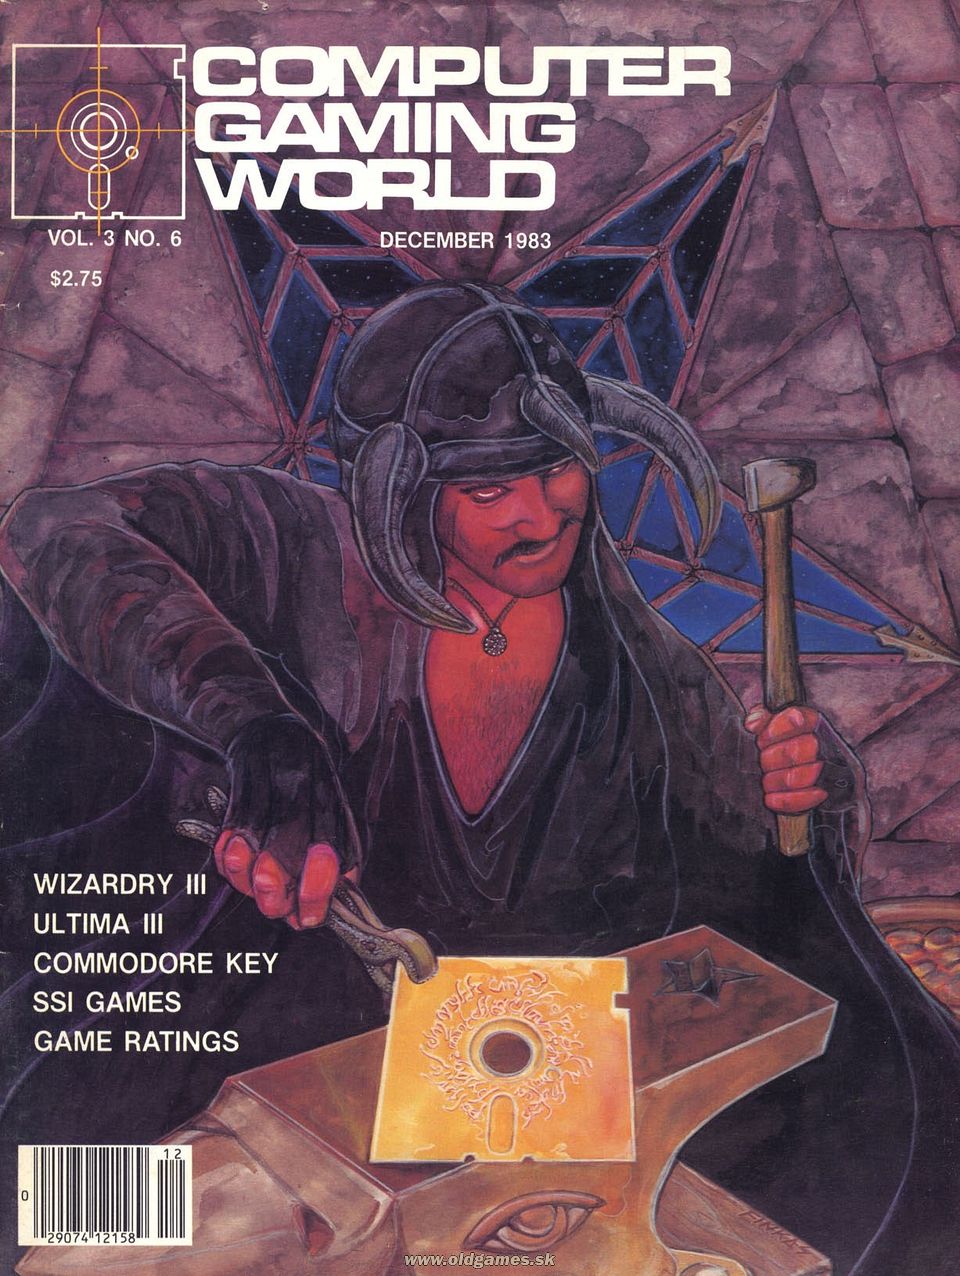 CGW 3.6 (December 1983)